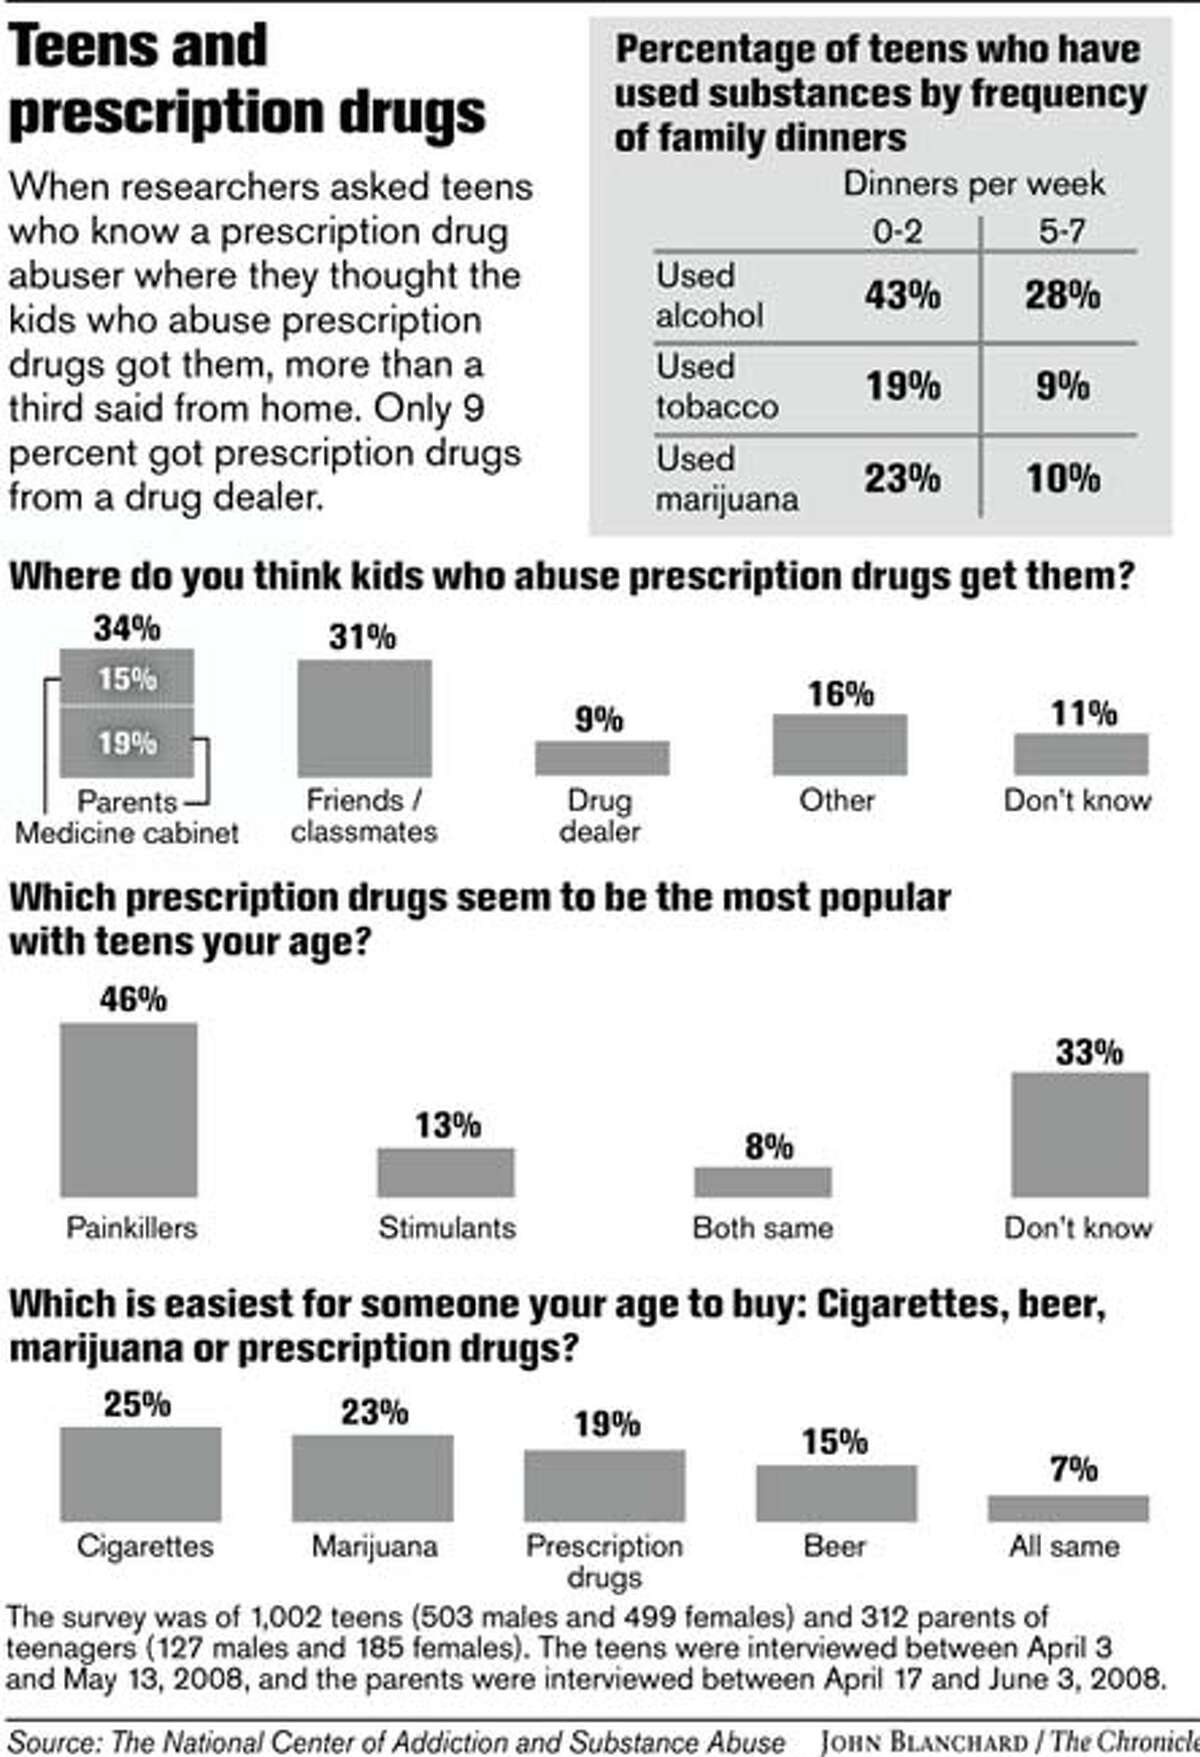 Teens and prescription drugs (John Blanchard / The Chronicle)